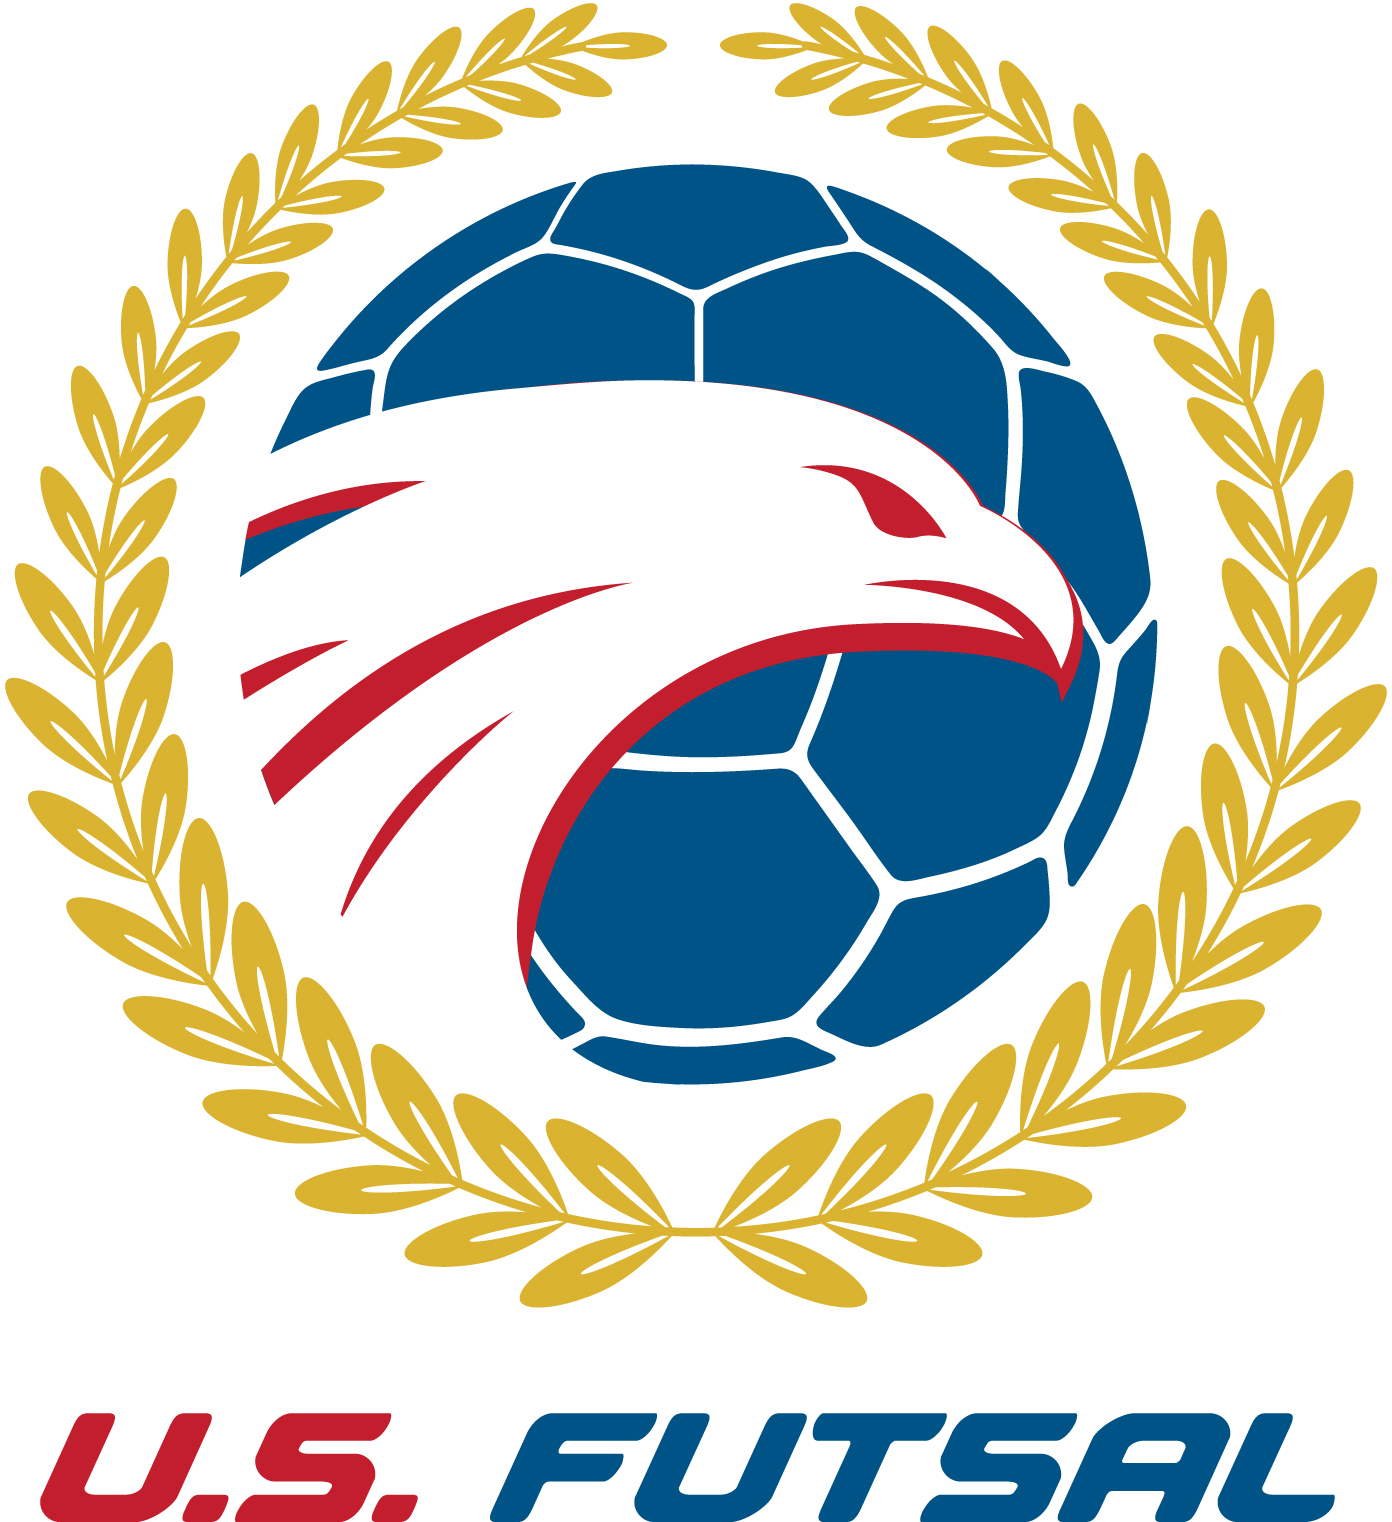 USA vs Uruguay: Quarterfinal- AMF Futsal World Cup 2023 – Oregon SportsBeat